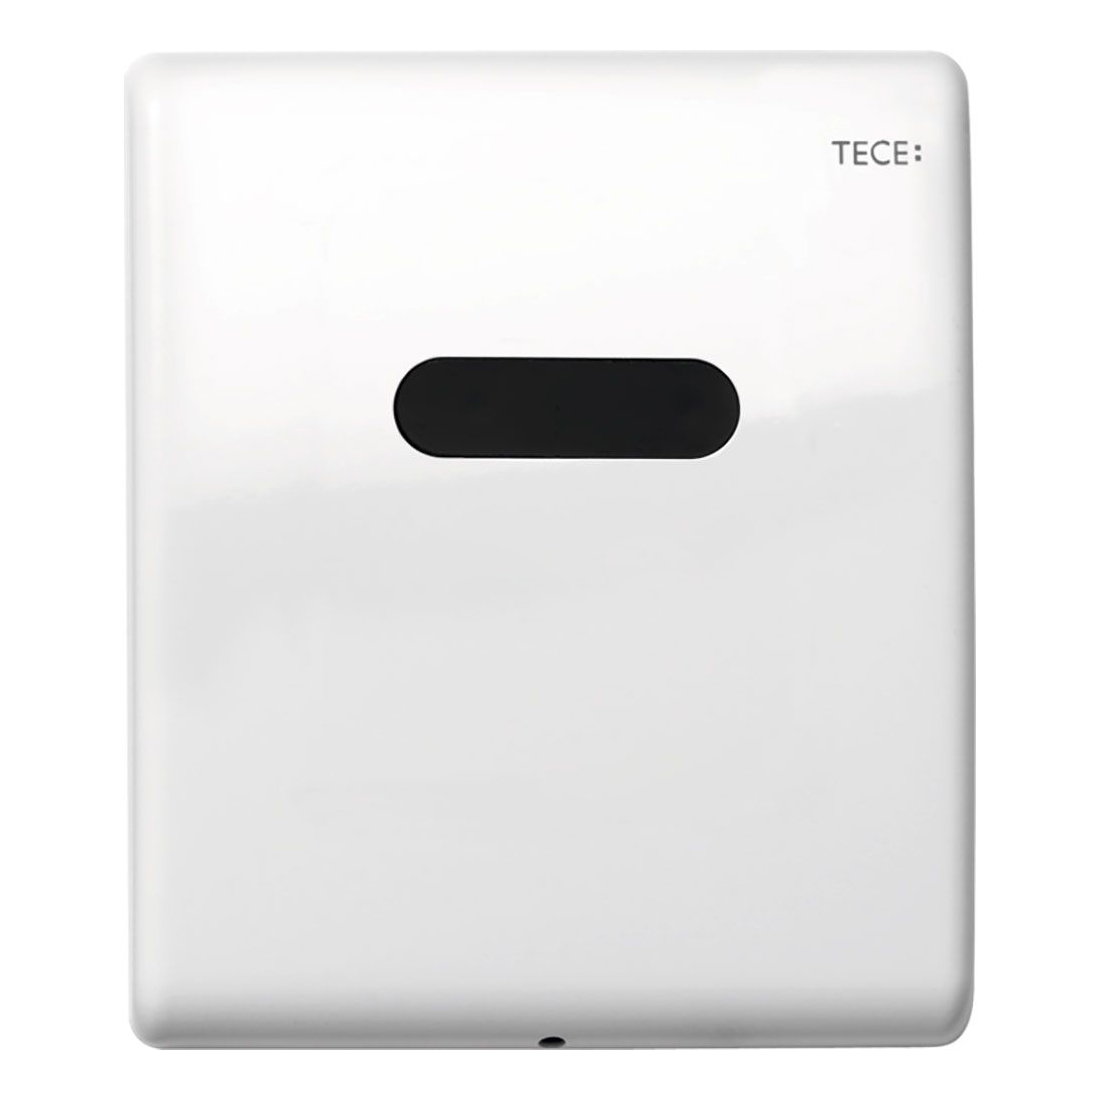 Кнопка для инсталляции Tece TECEplanus Urinal 9242356, 6 V батарея, белая глянцевая кнопка для инсталляции tece teceplanus urinal 9242356 6 v батарея белая глянцевая